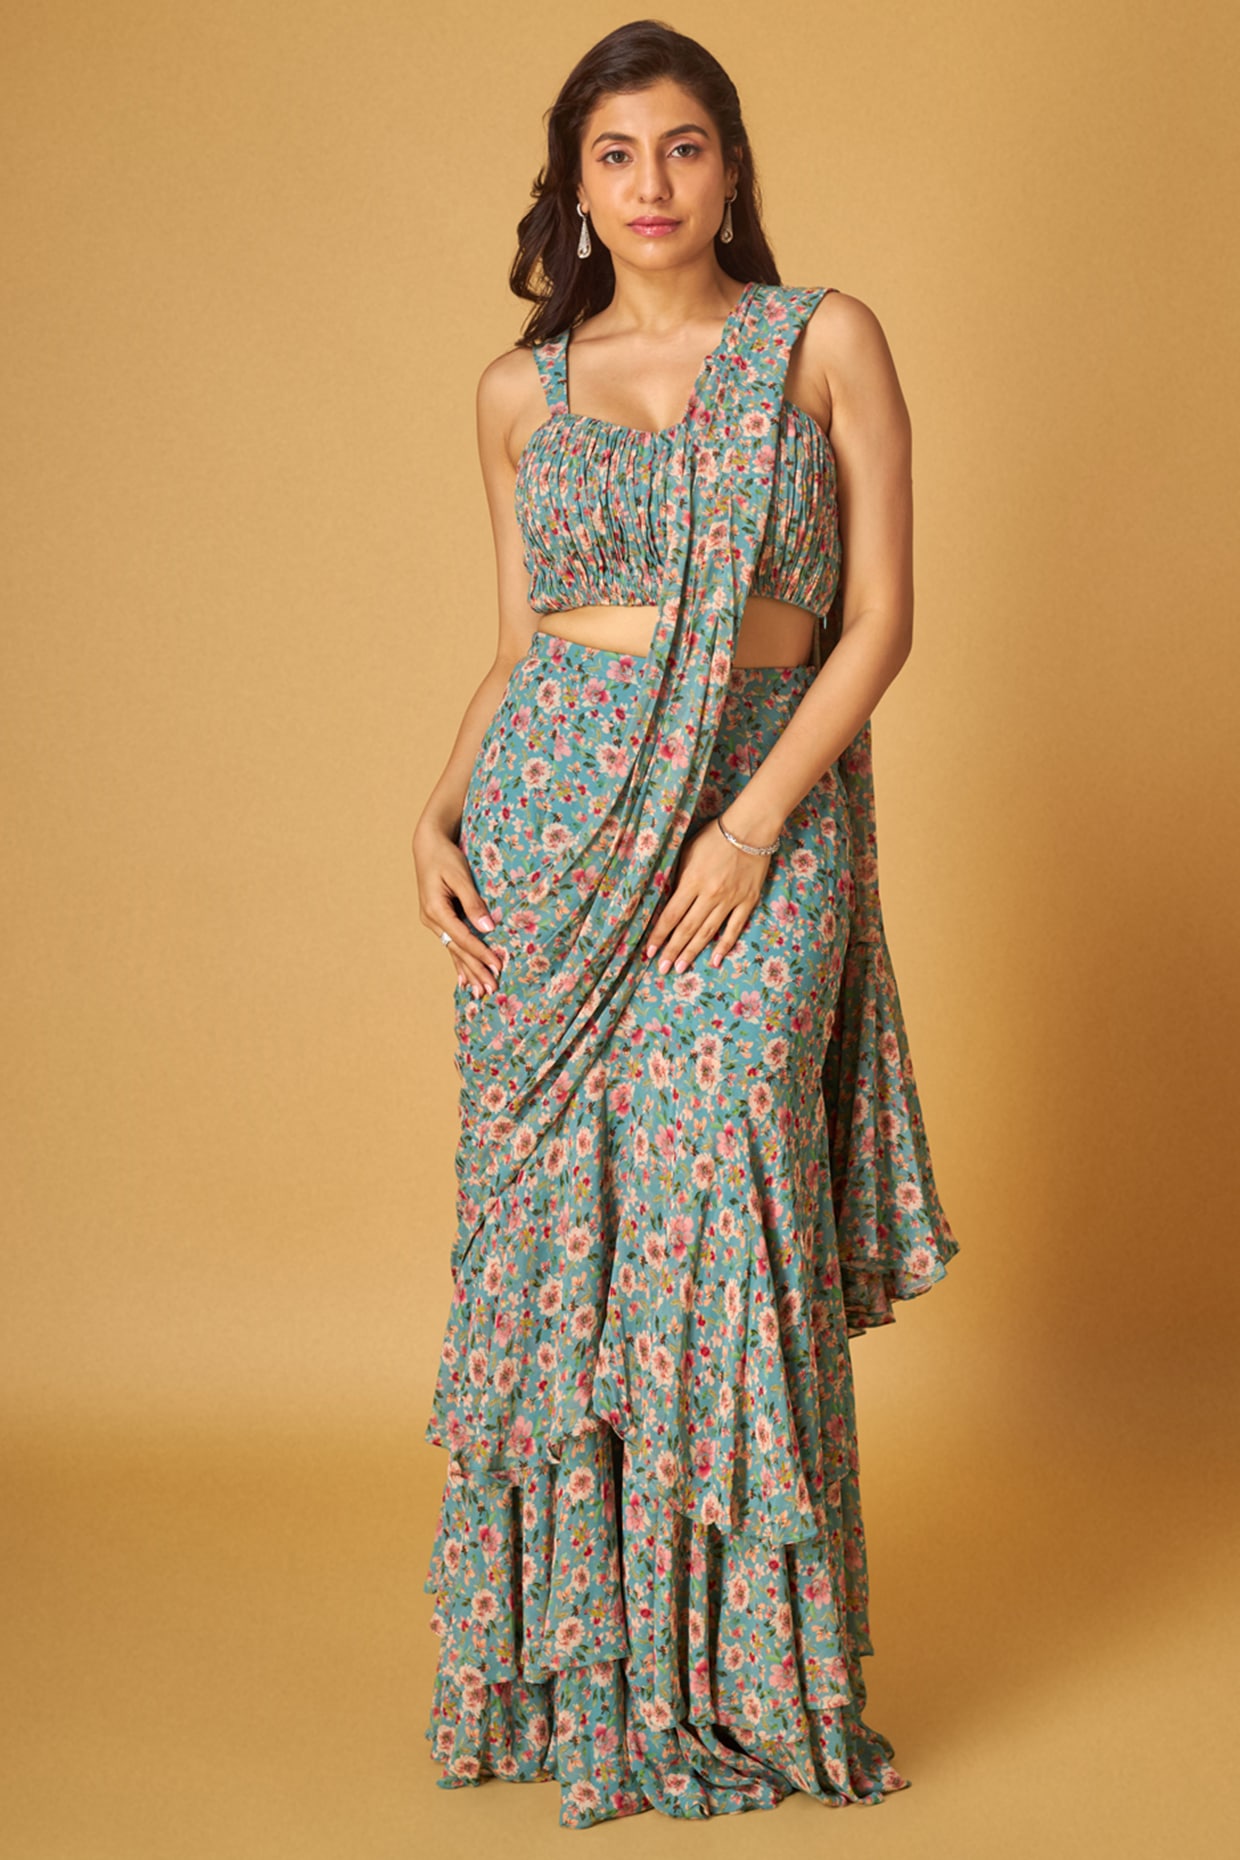 Designer Indian Sarees blouse jewelry by SakhiFashions Shoponline –  sakhifashions